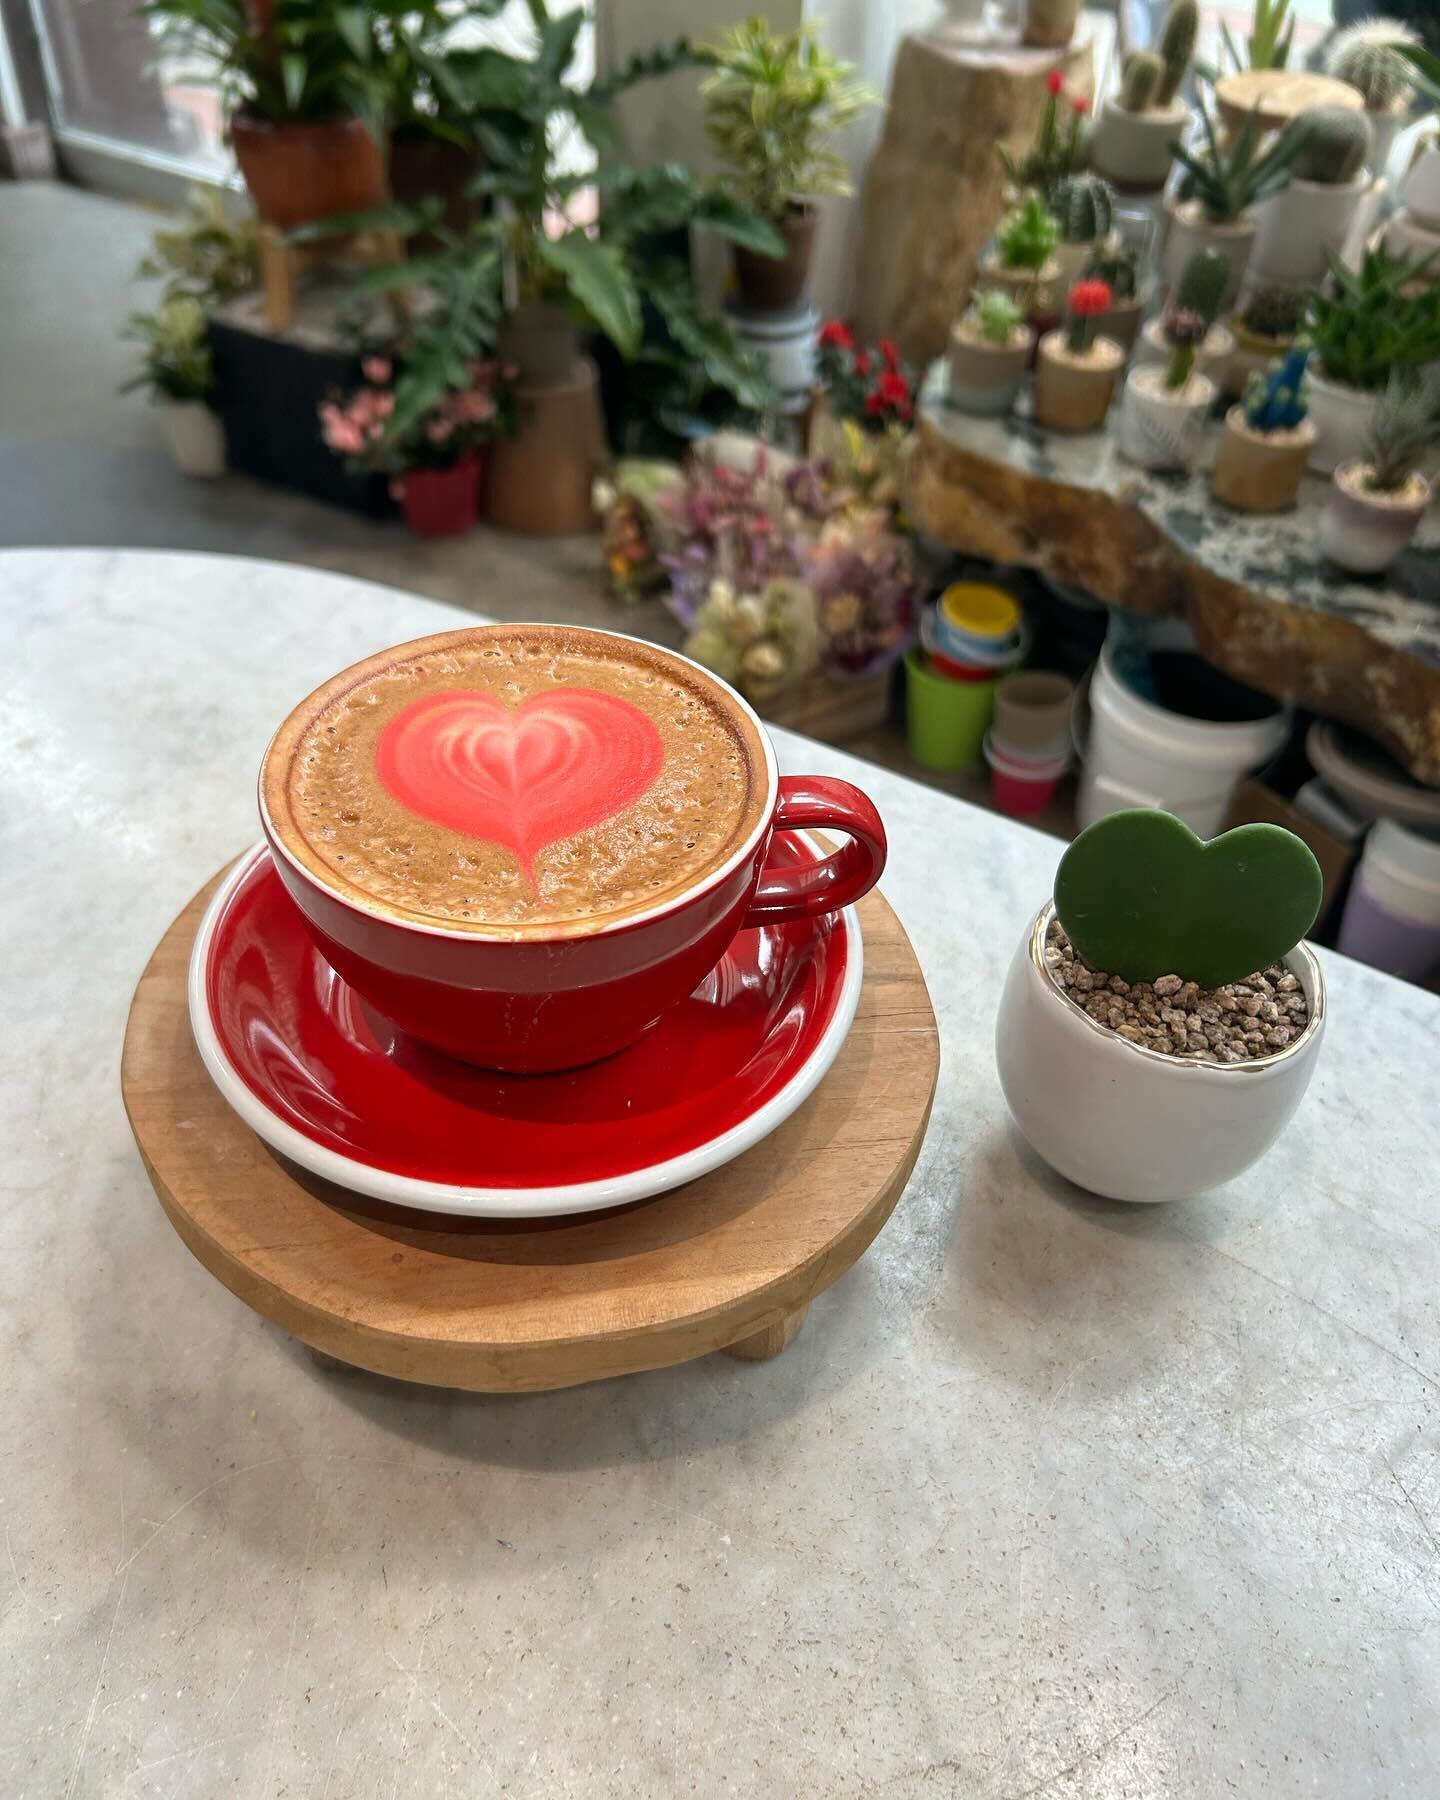 Heart-to-Heart.
#happyvalentinesday #sweetheart #hoyaplant #latteheart #remi43flowerandcoffee